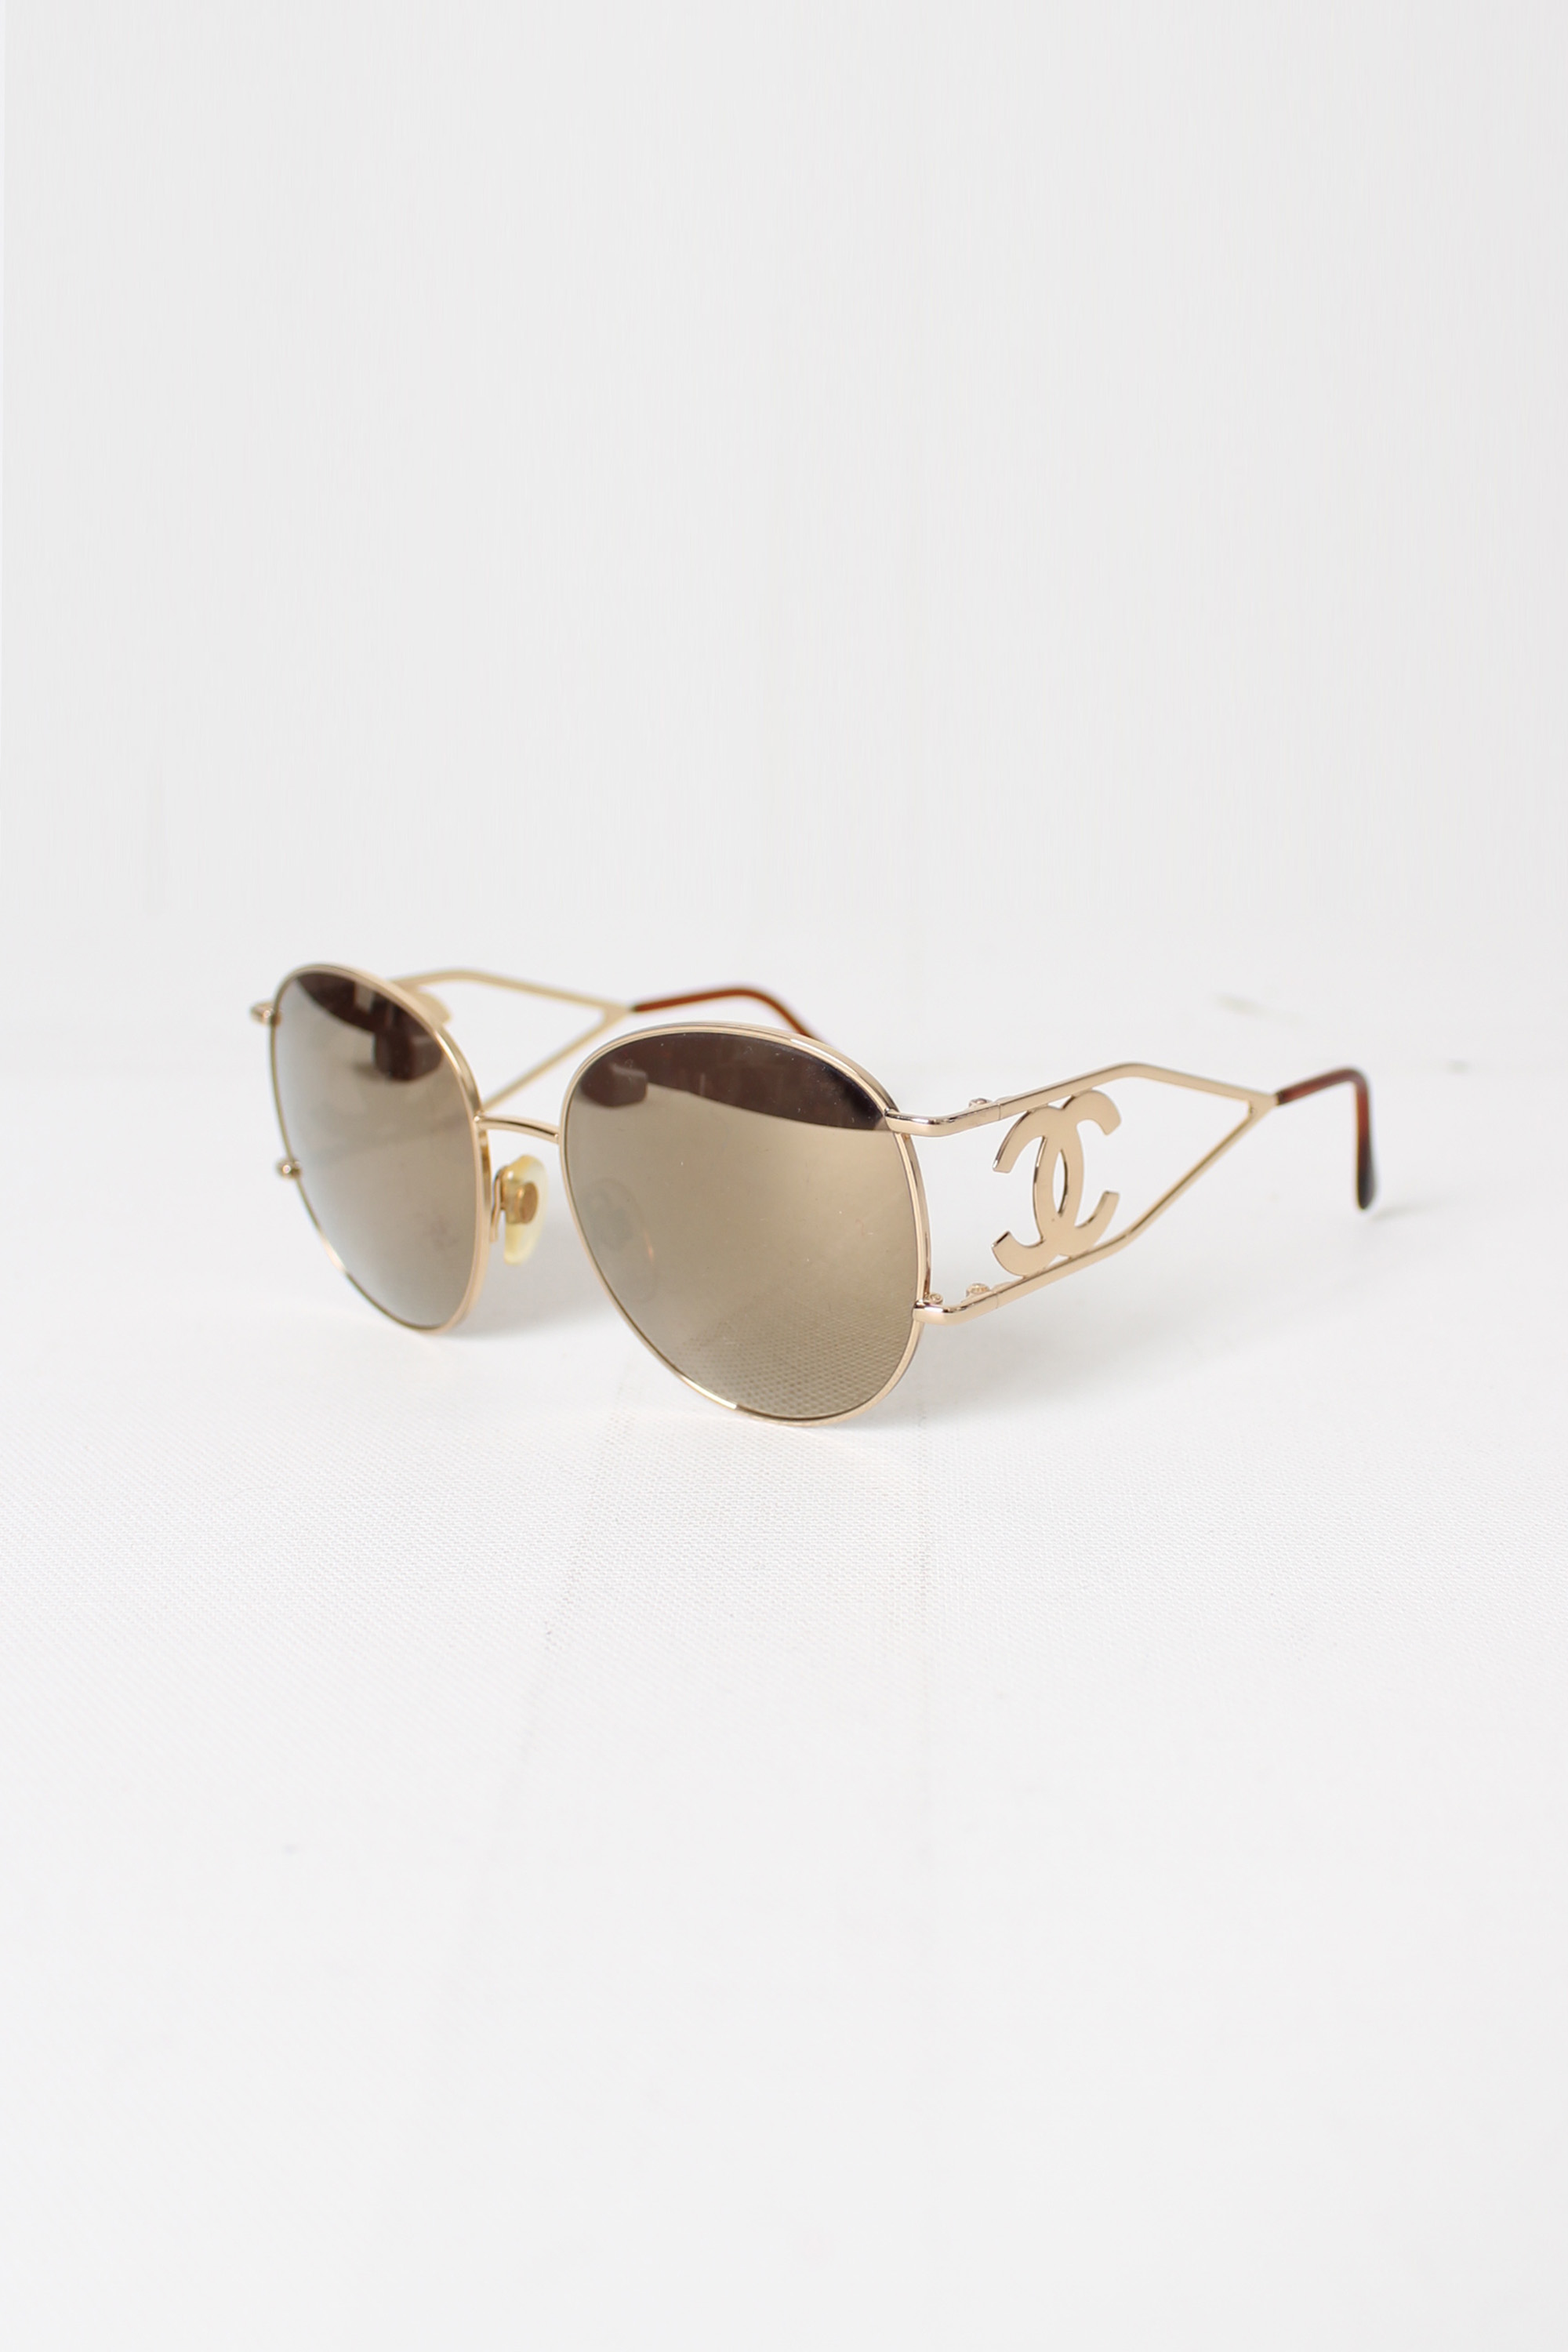 CHANEL Gold Frame Sunglasses